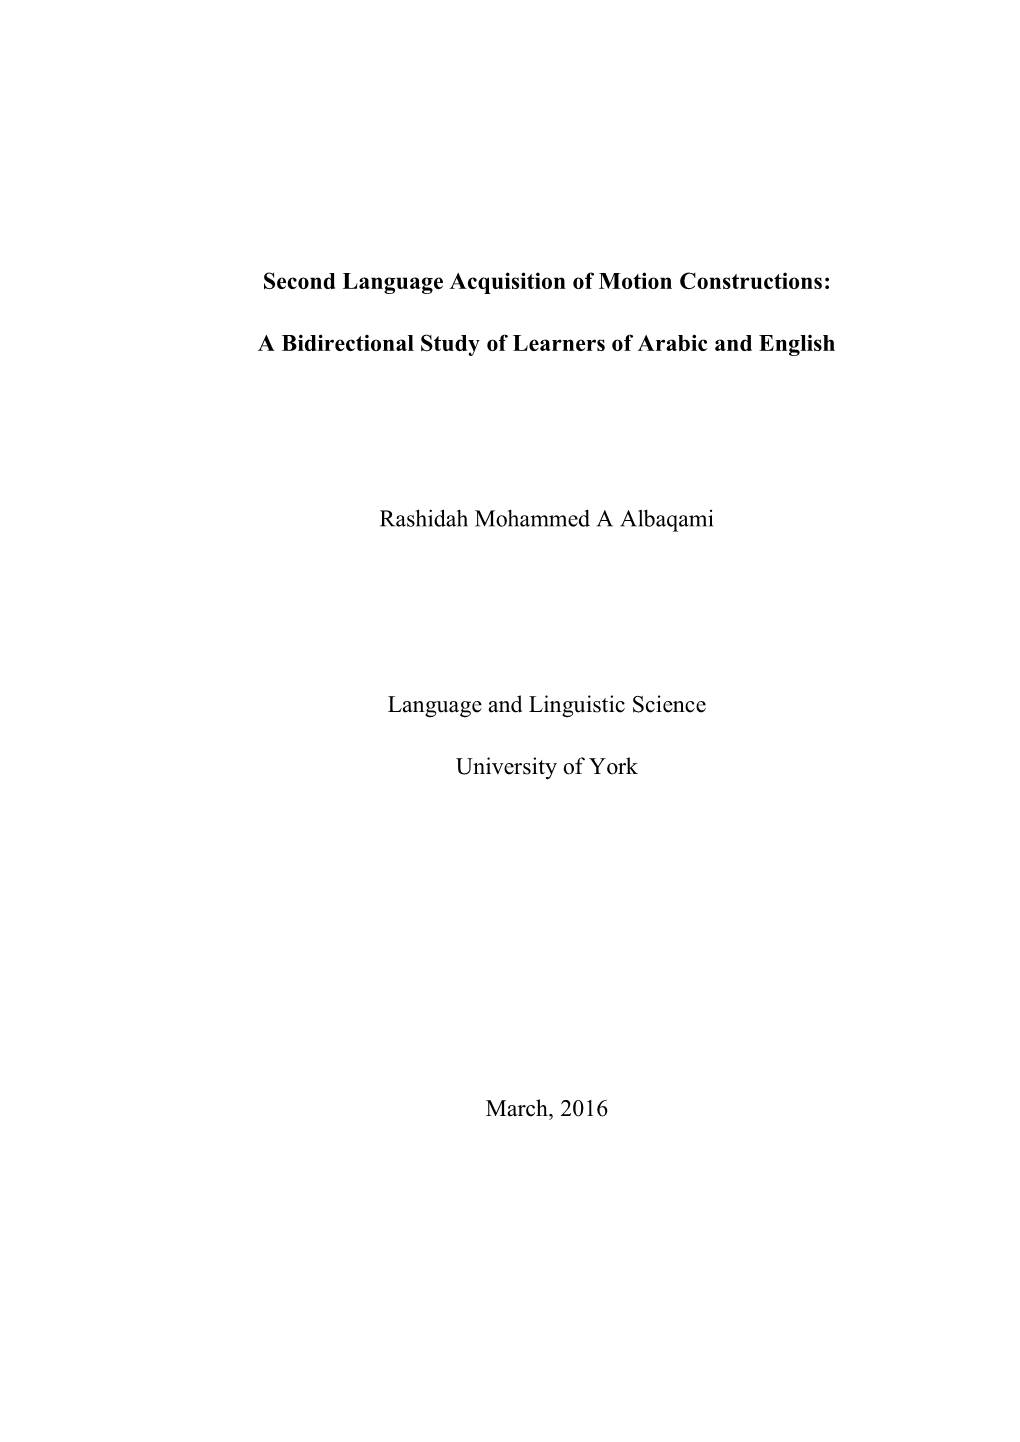 Second Language Acquisition of Motion Constructions: A